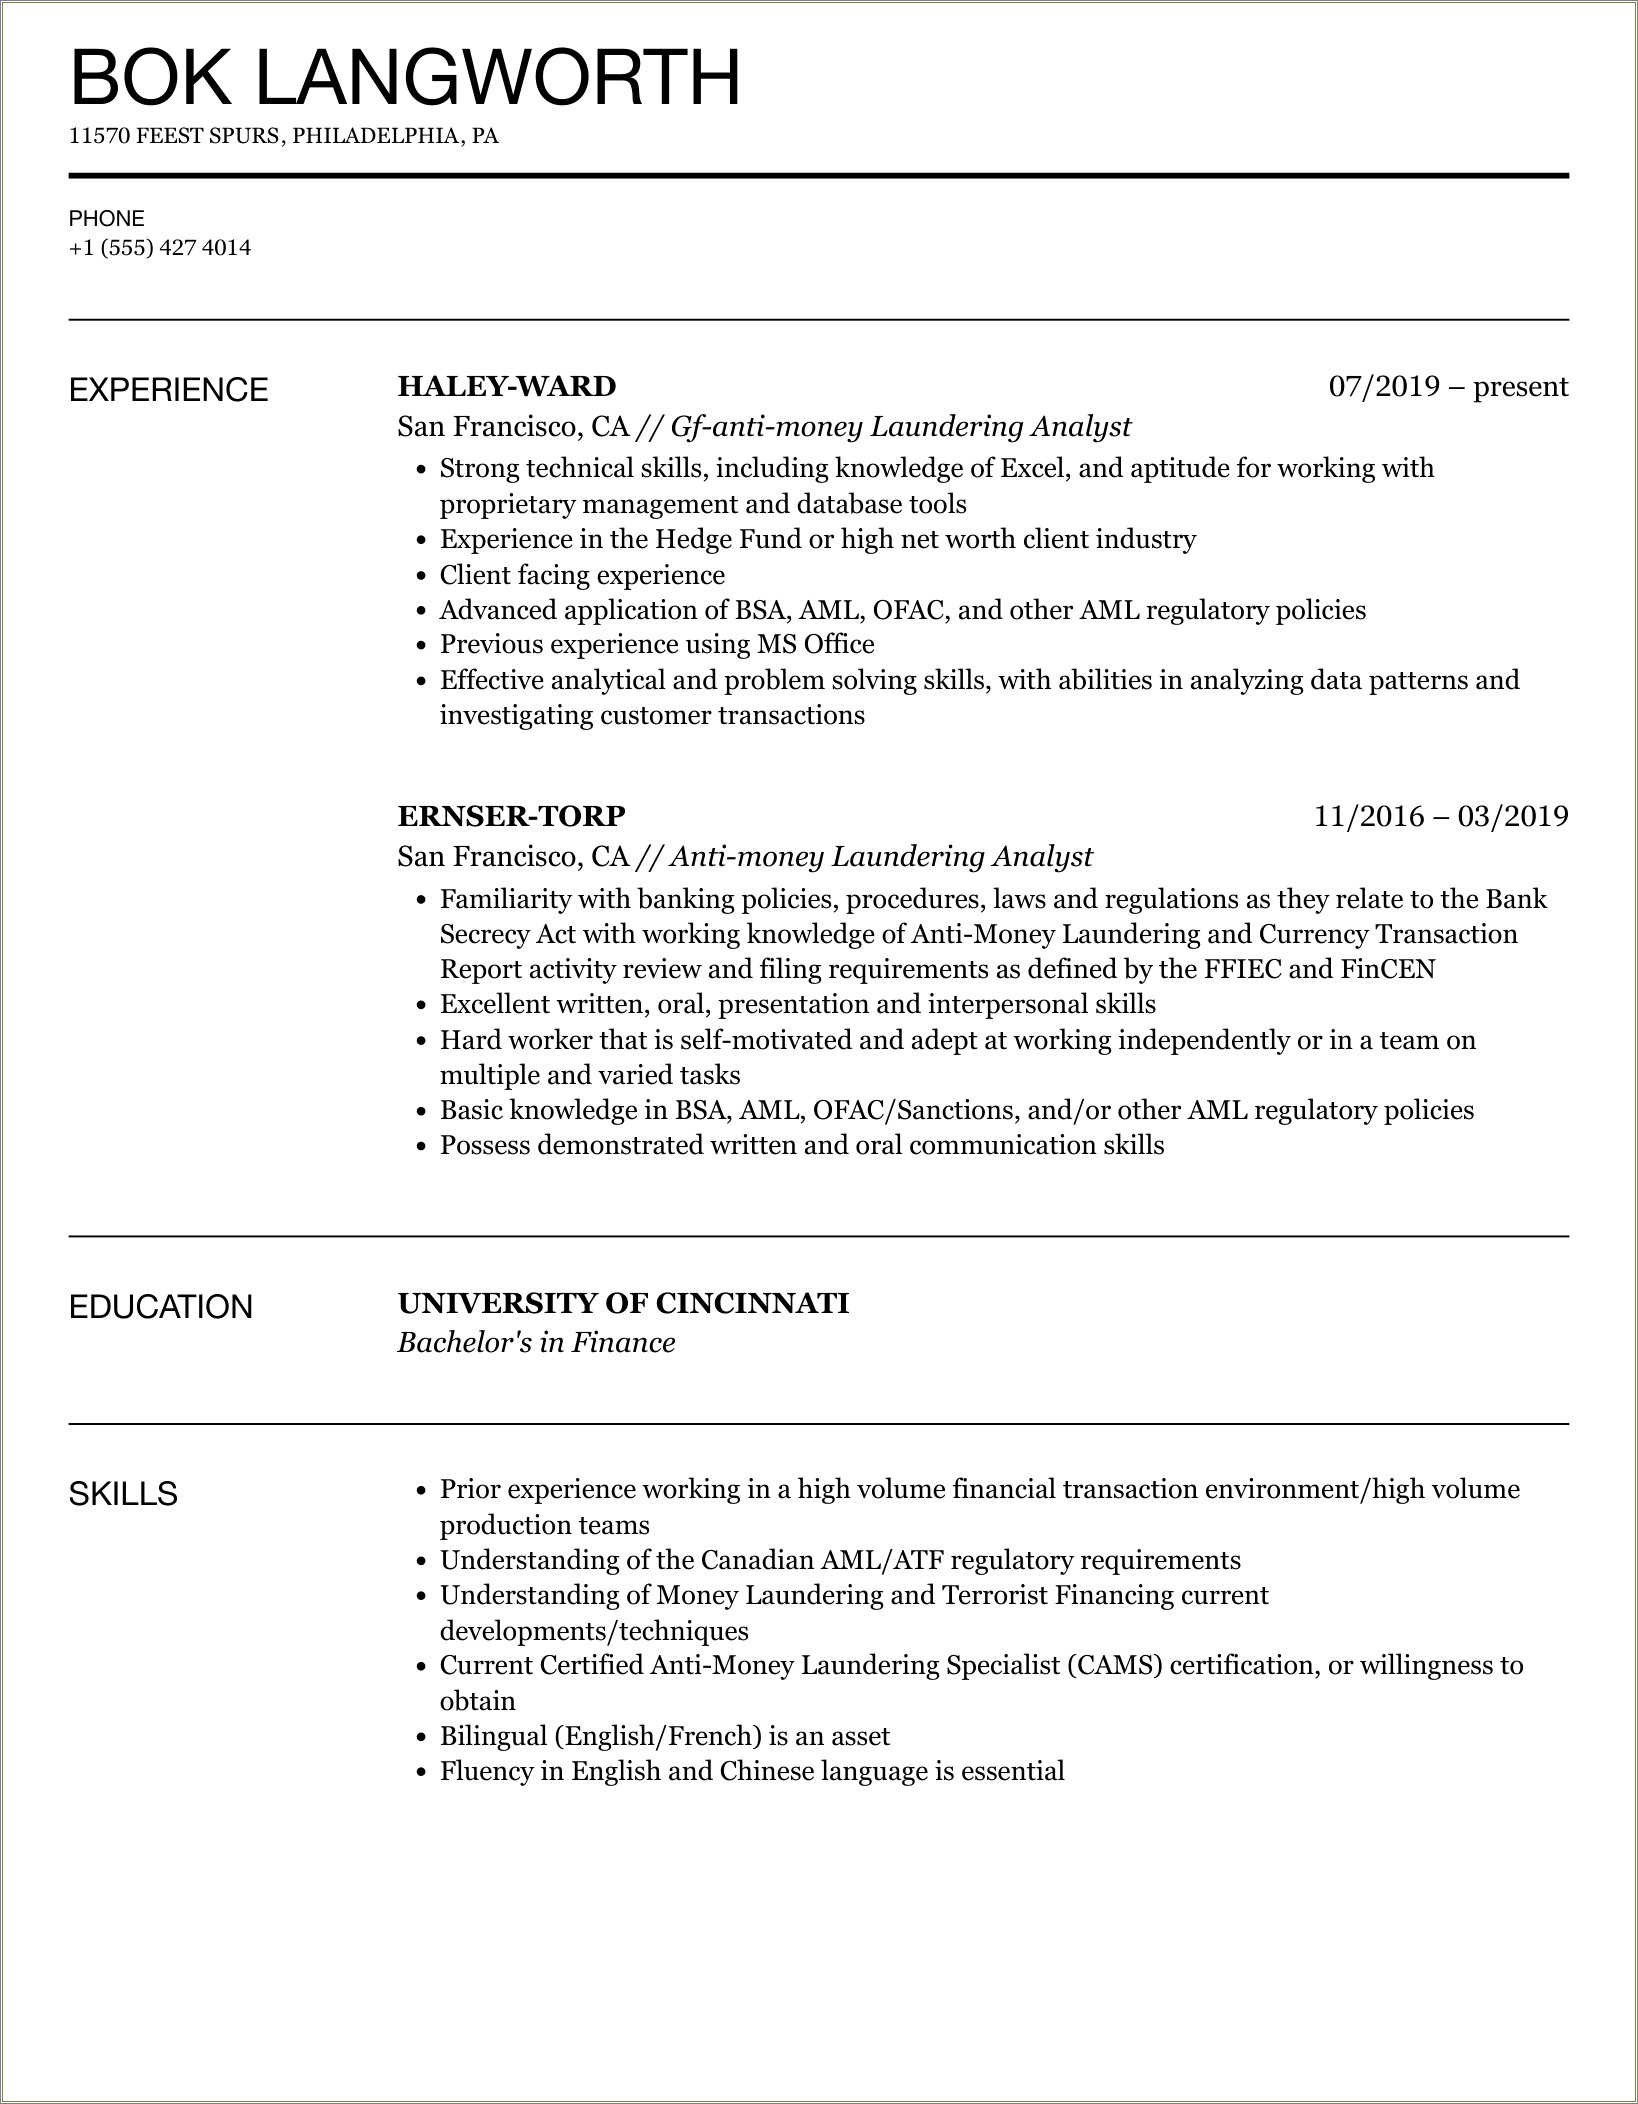 Sample Resume For Aml Kyc Analyst